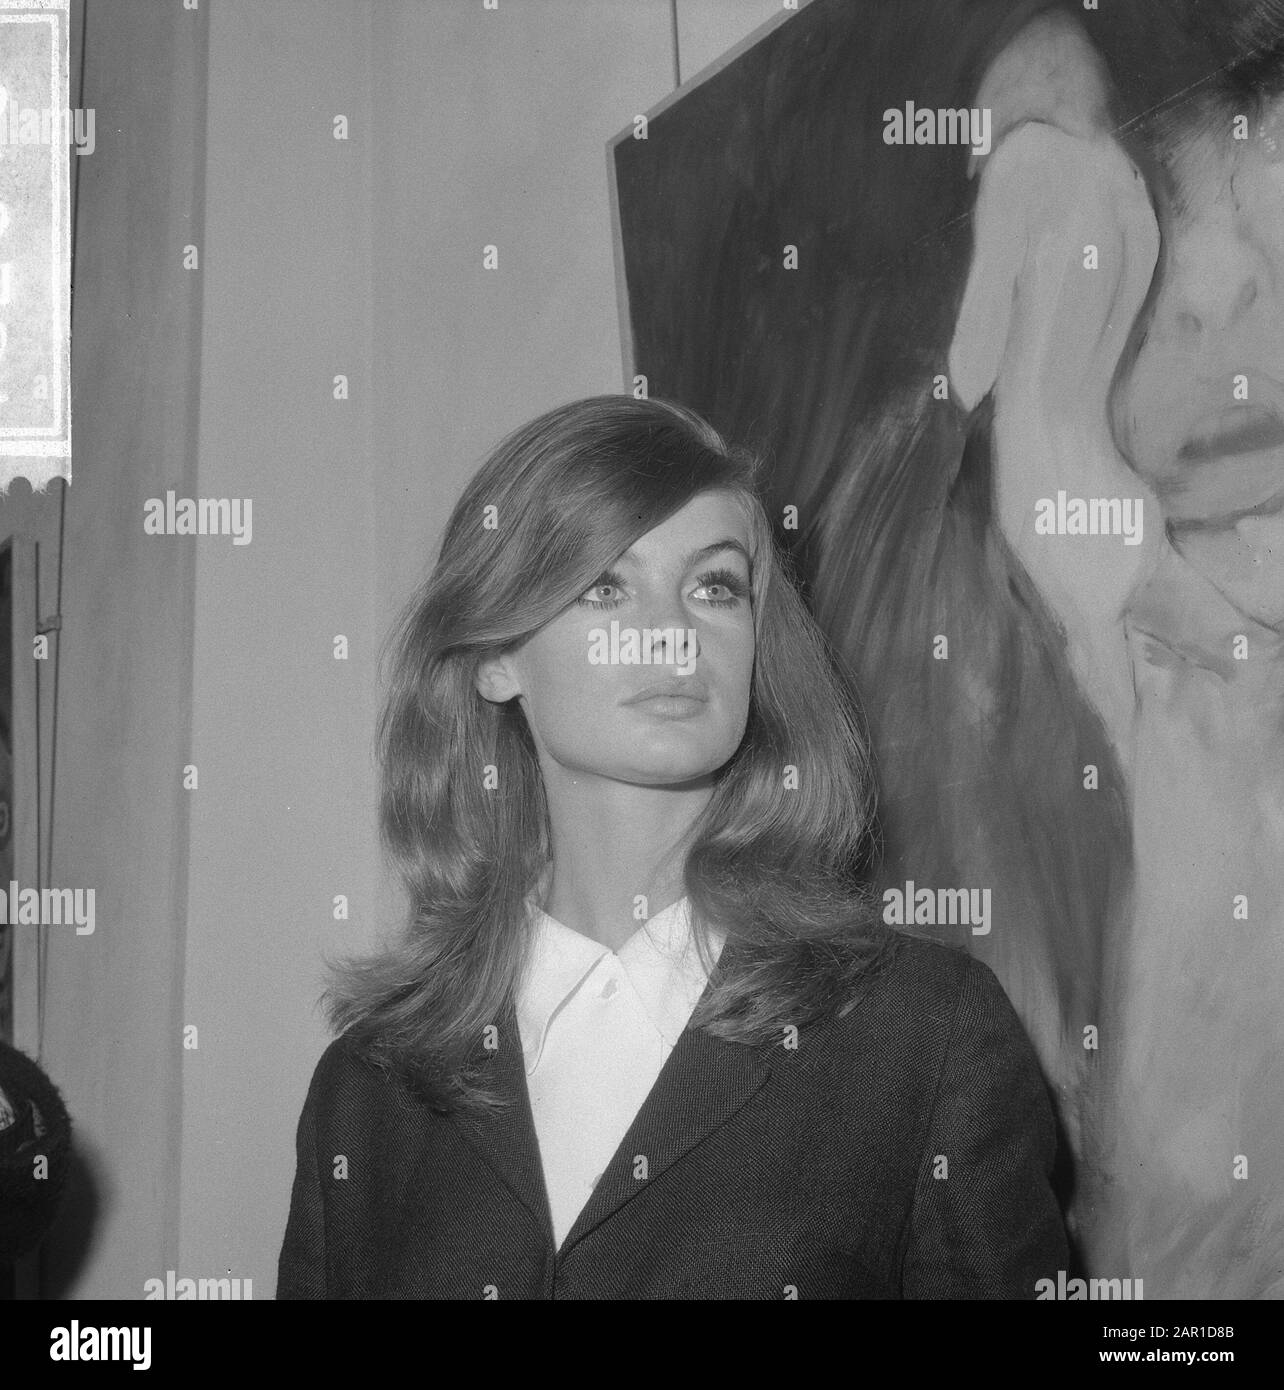 Jean Shrimpton (photo model) exhibition opened at Galerie Krikhaar in Amsterdam Date: 17 september 1965 Location: Amsterdam, Noord-Holland Keywords: exhibitions Personal name: Galerie Krikhaar, Jean Shrimpton Stock Photo